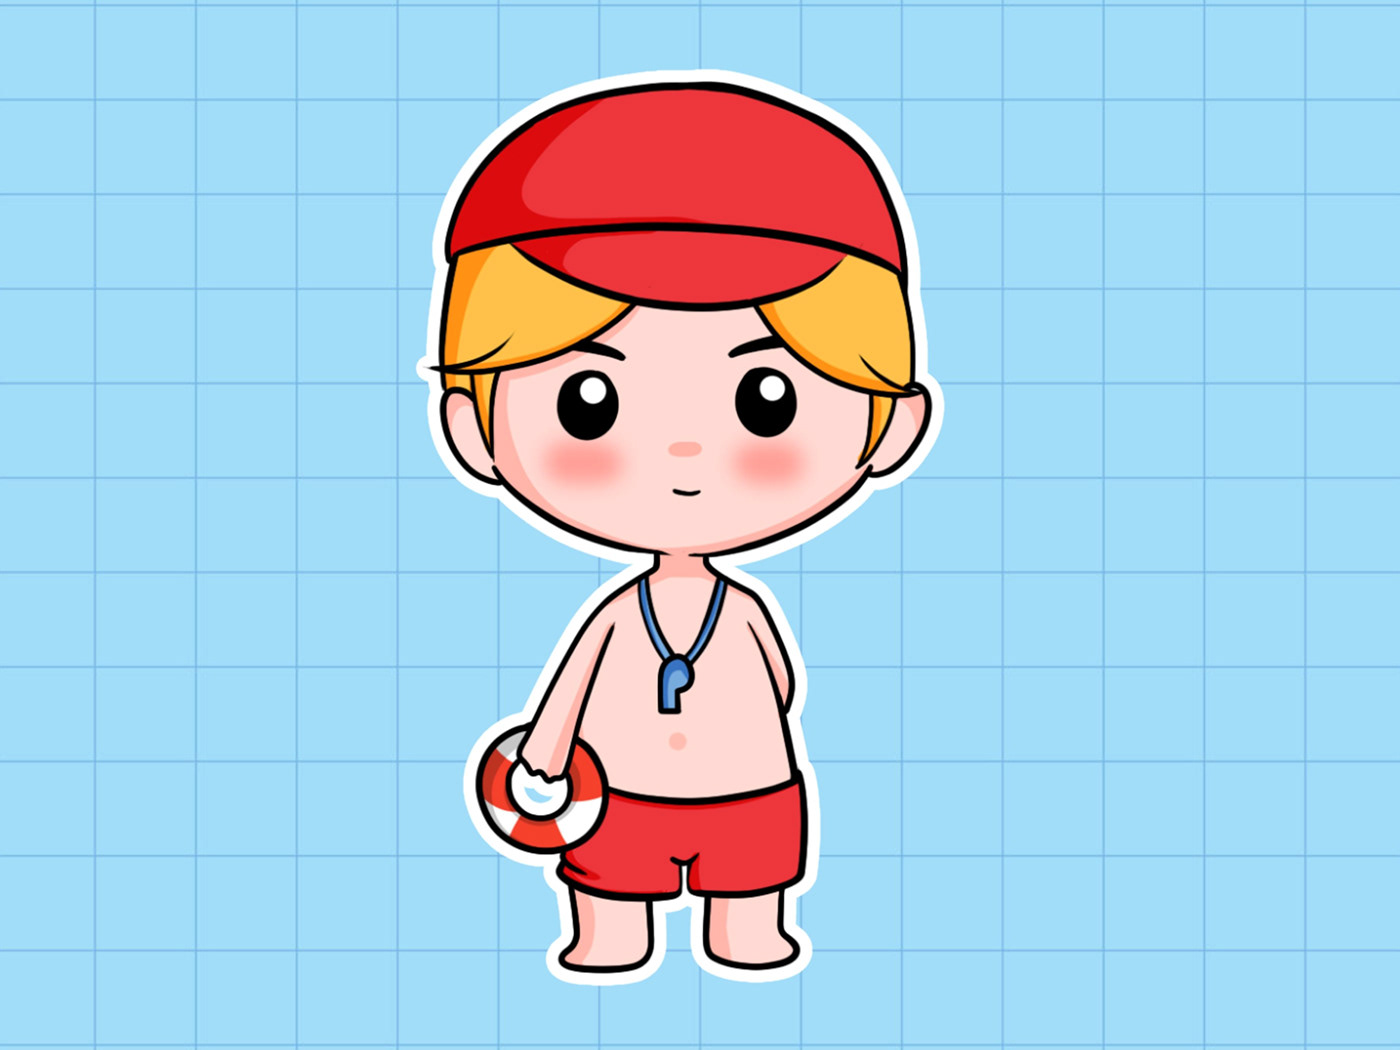 Chibi Cartoon Character Profession Lifeguard Boy